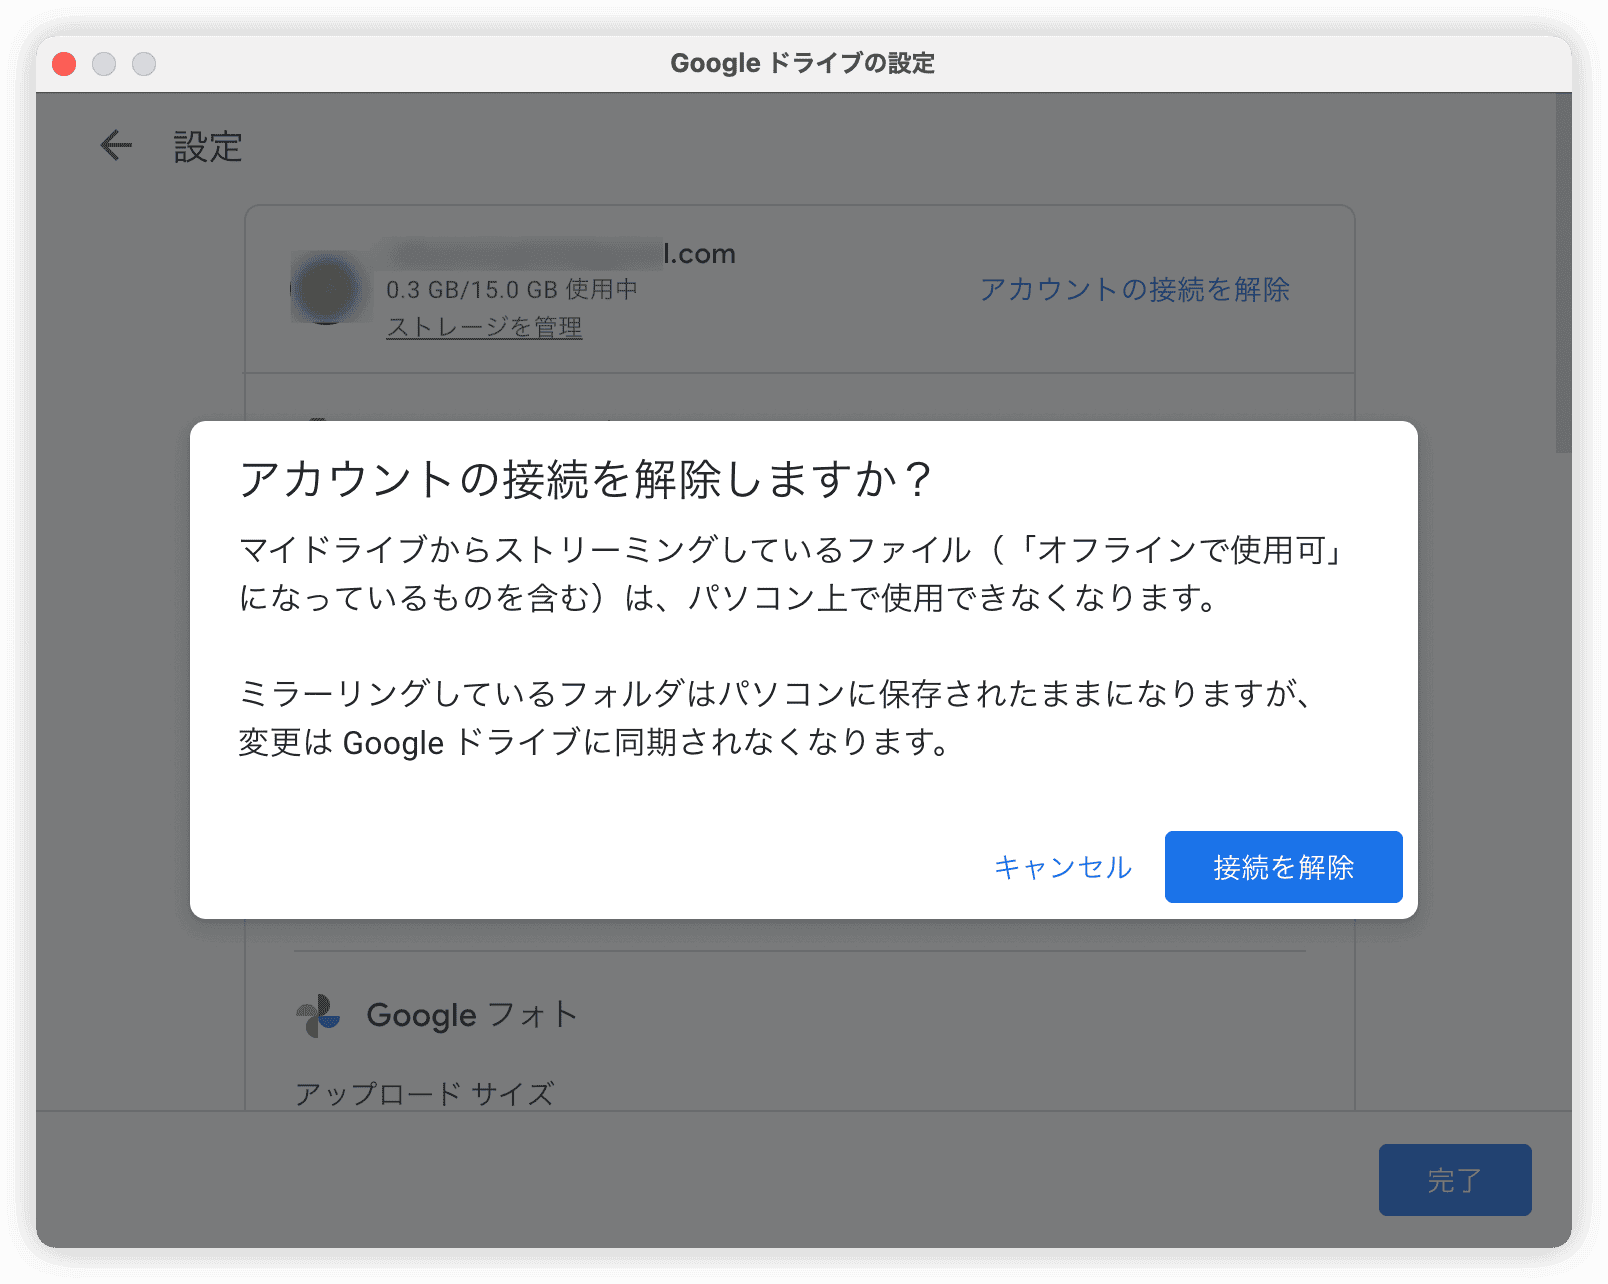 Google Driveアカウントの接続を解除する - ポップアップで接続を解除